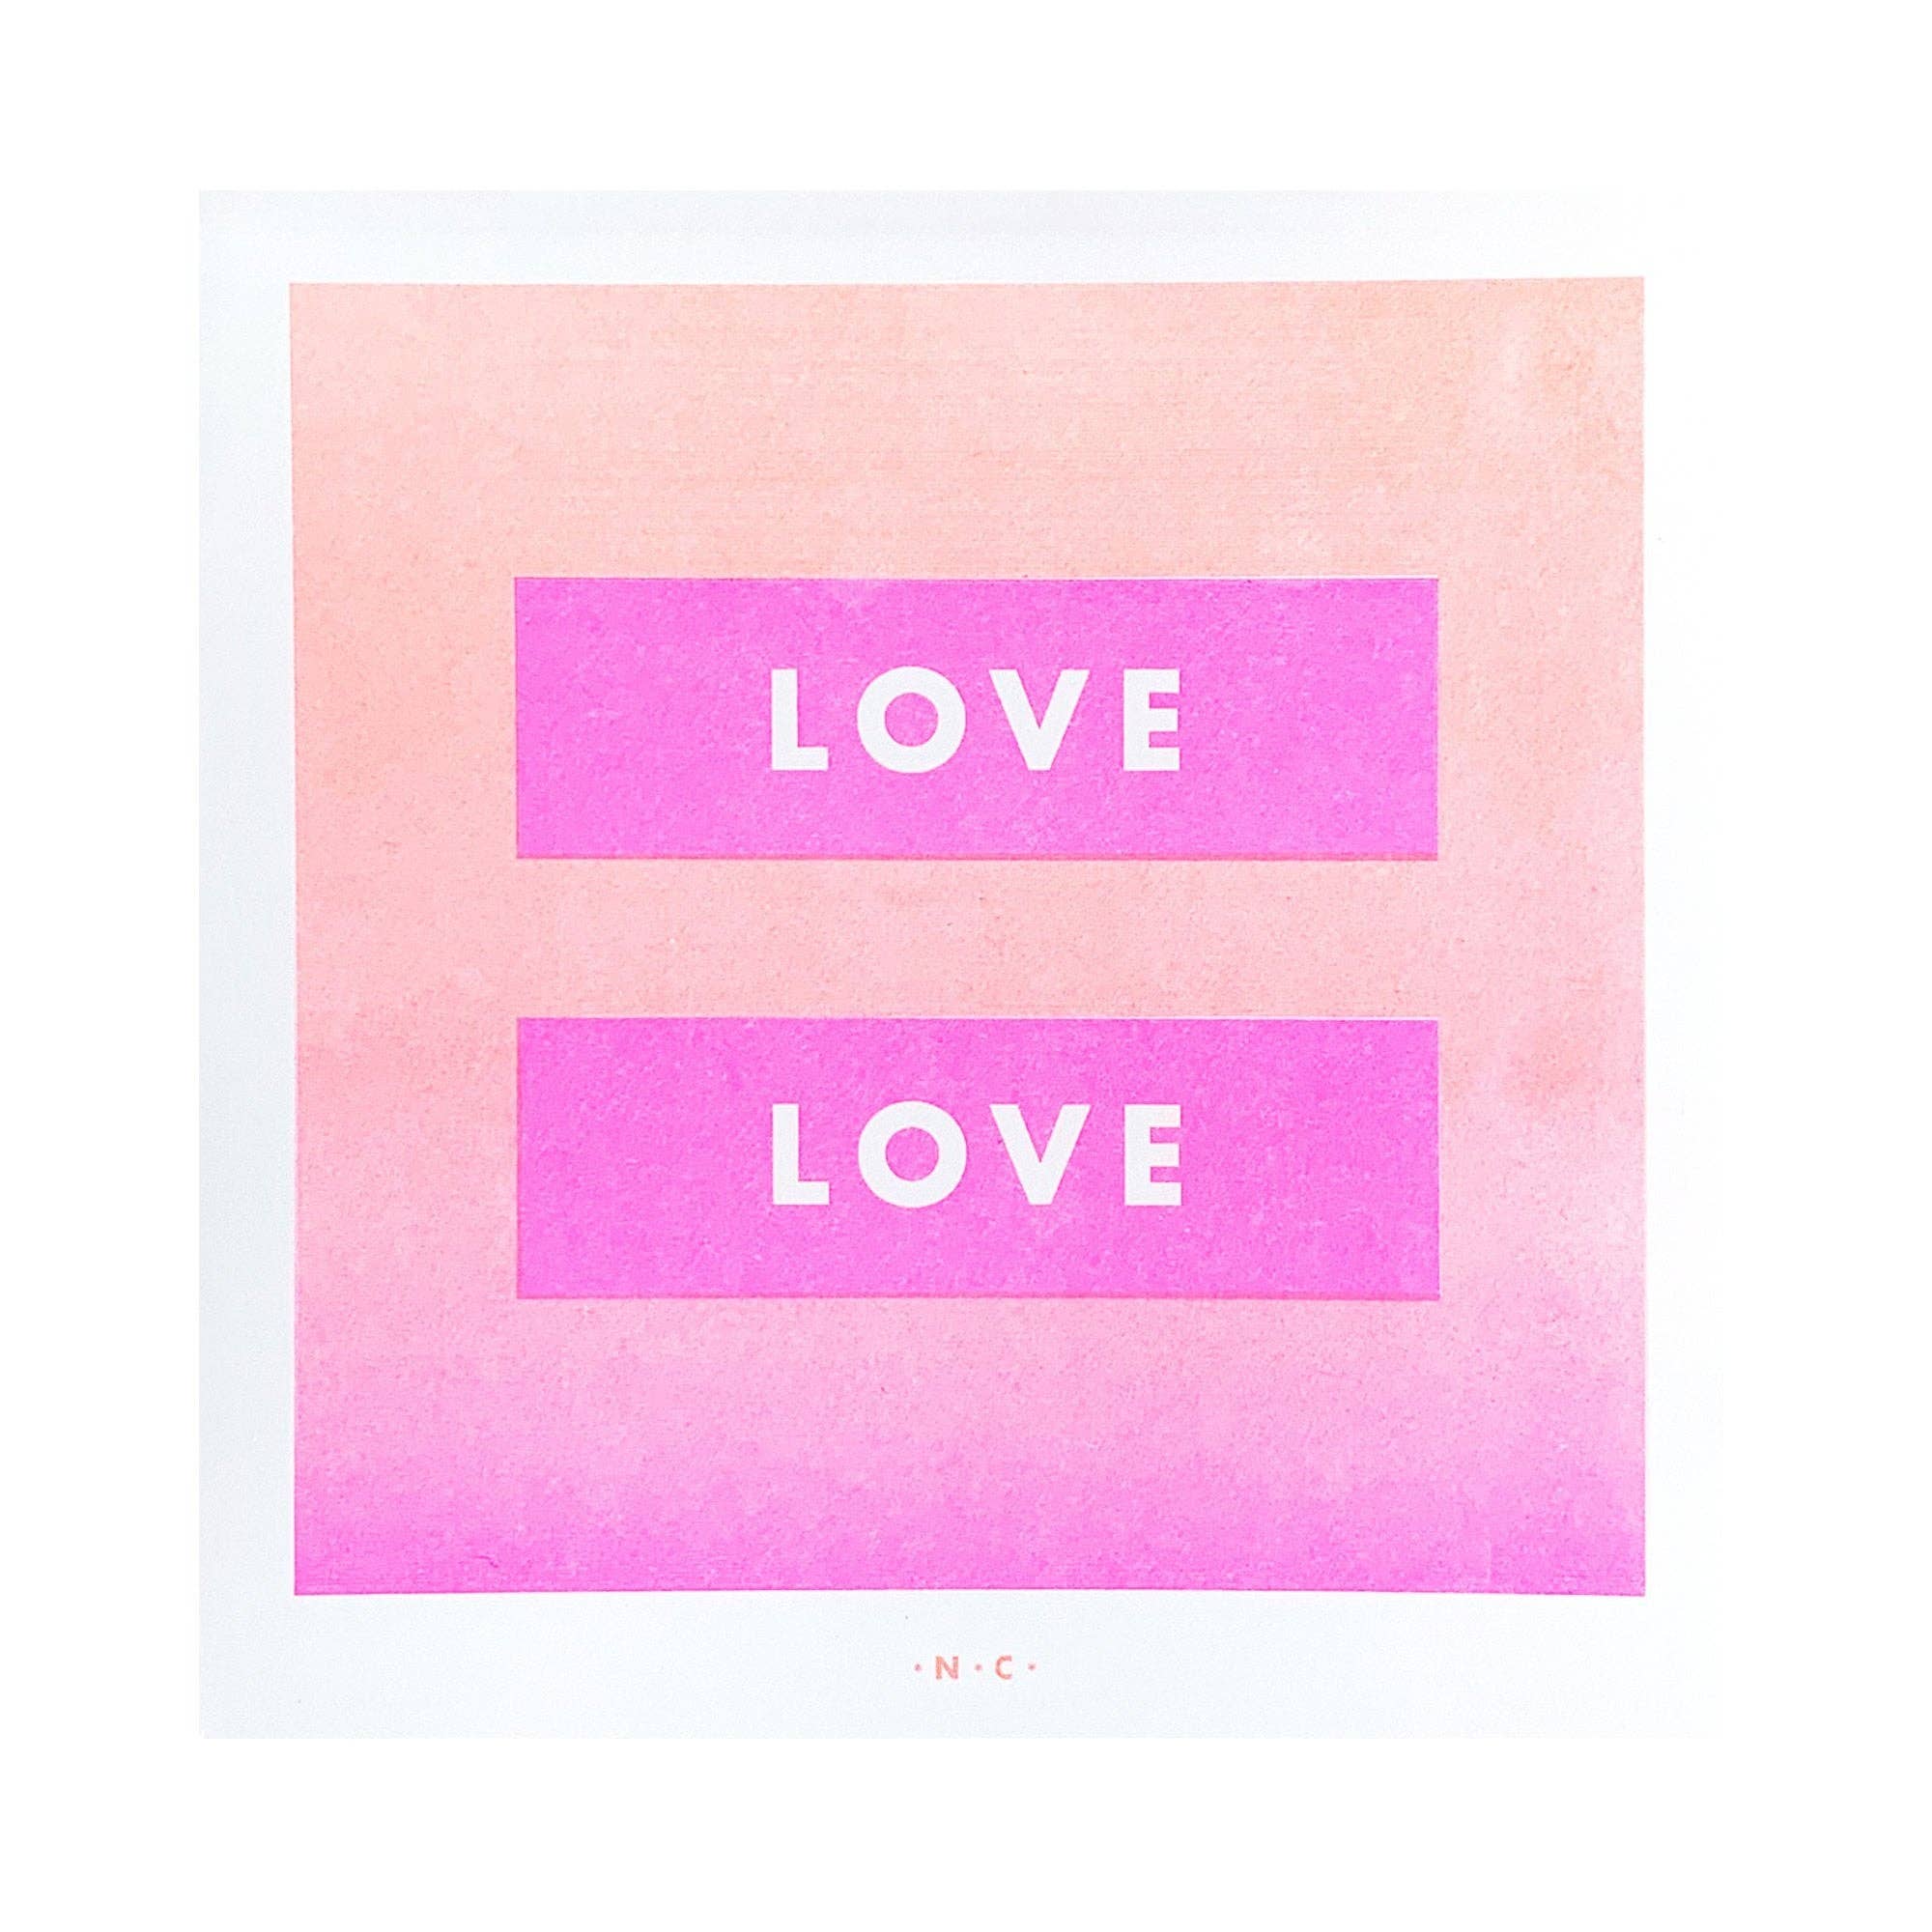 Love is Love - Art Risograph Print